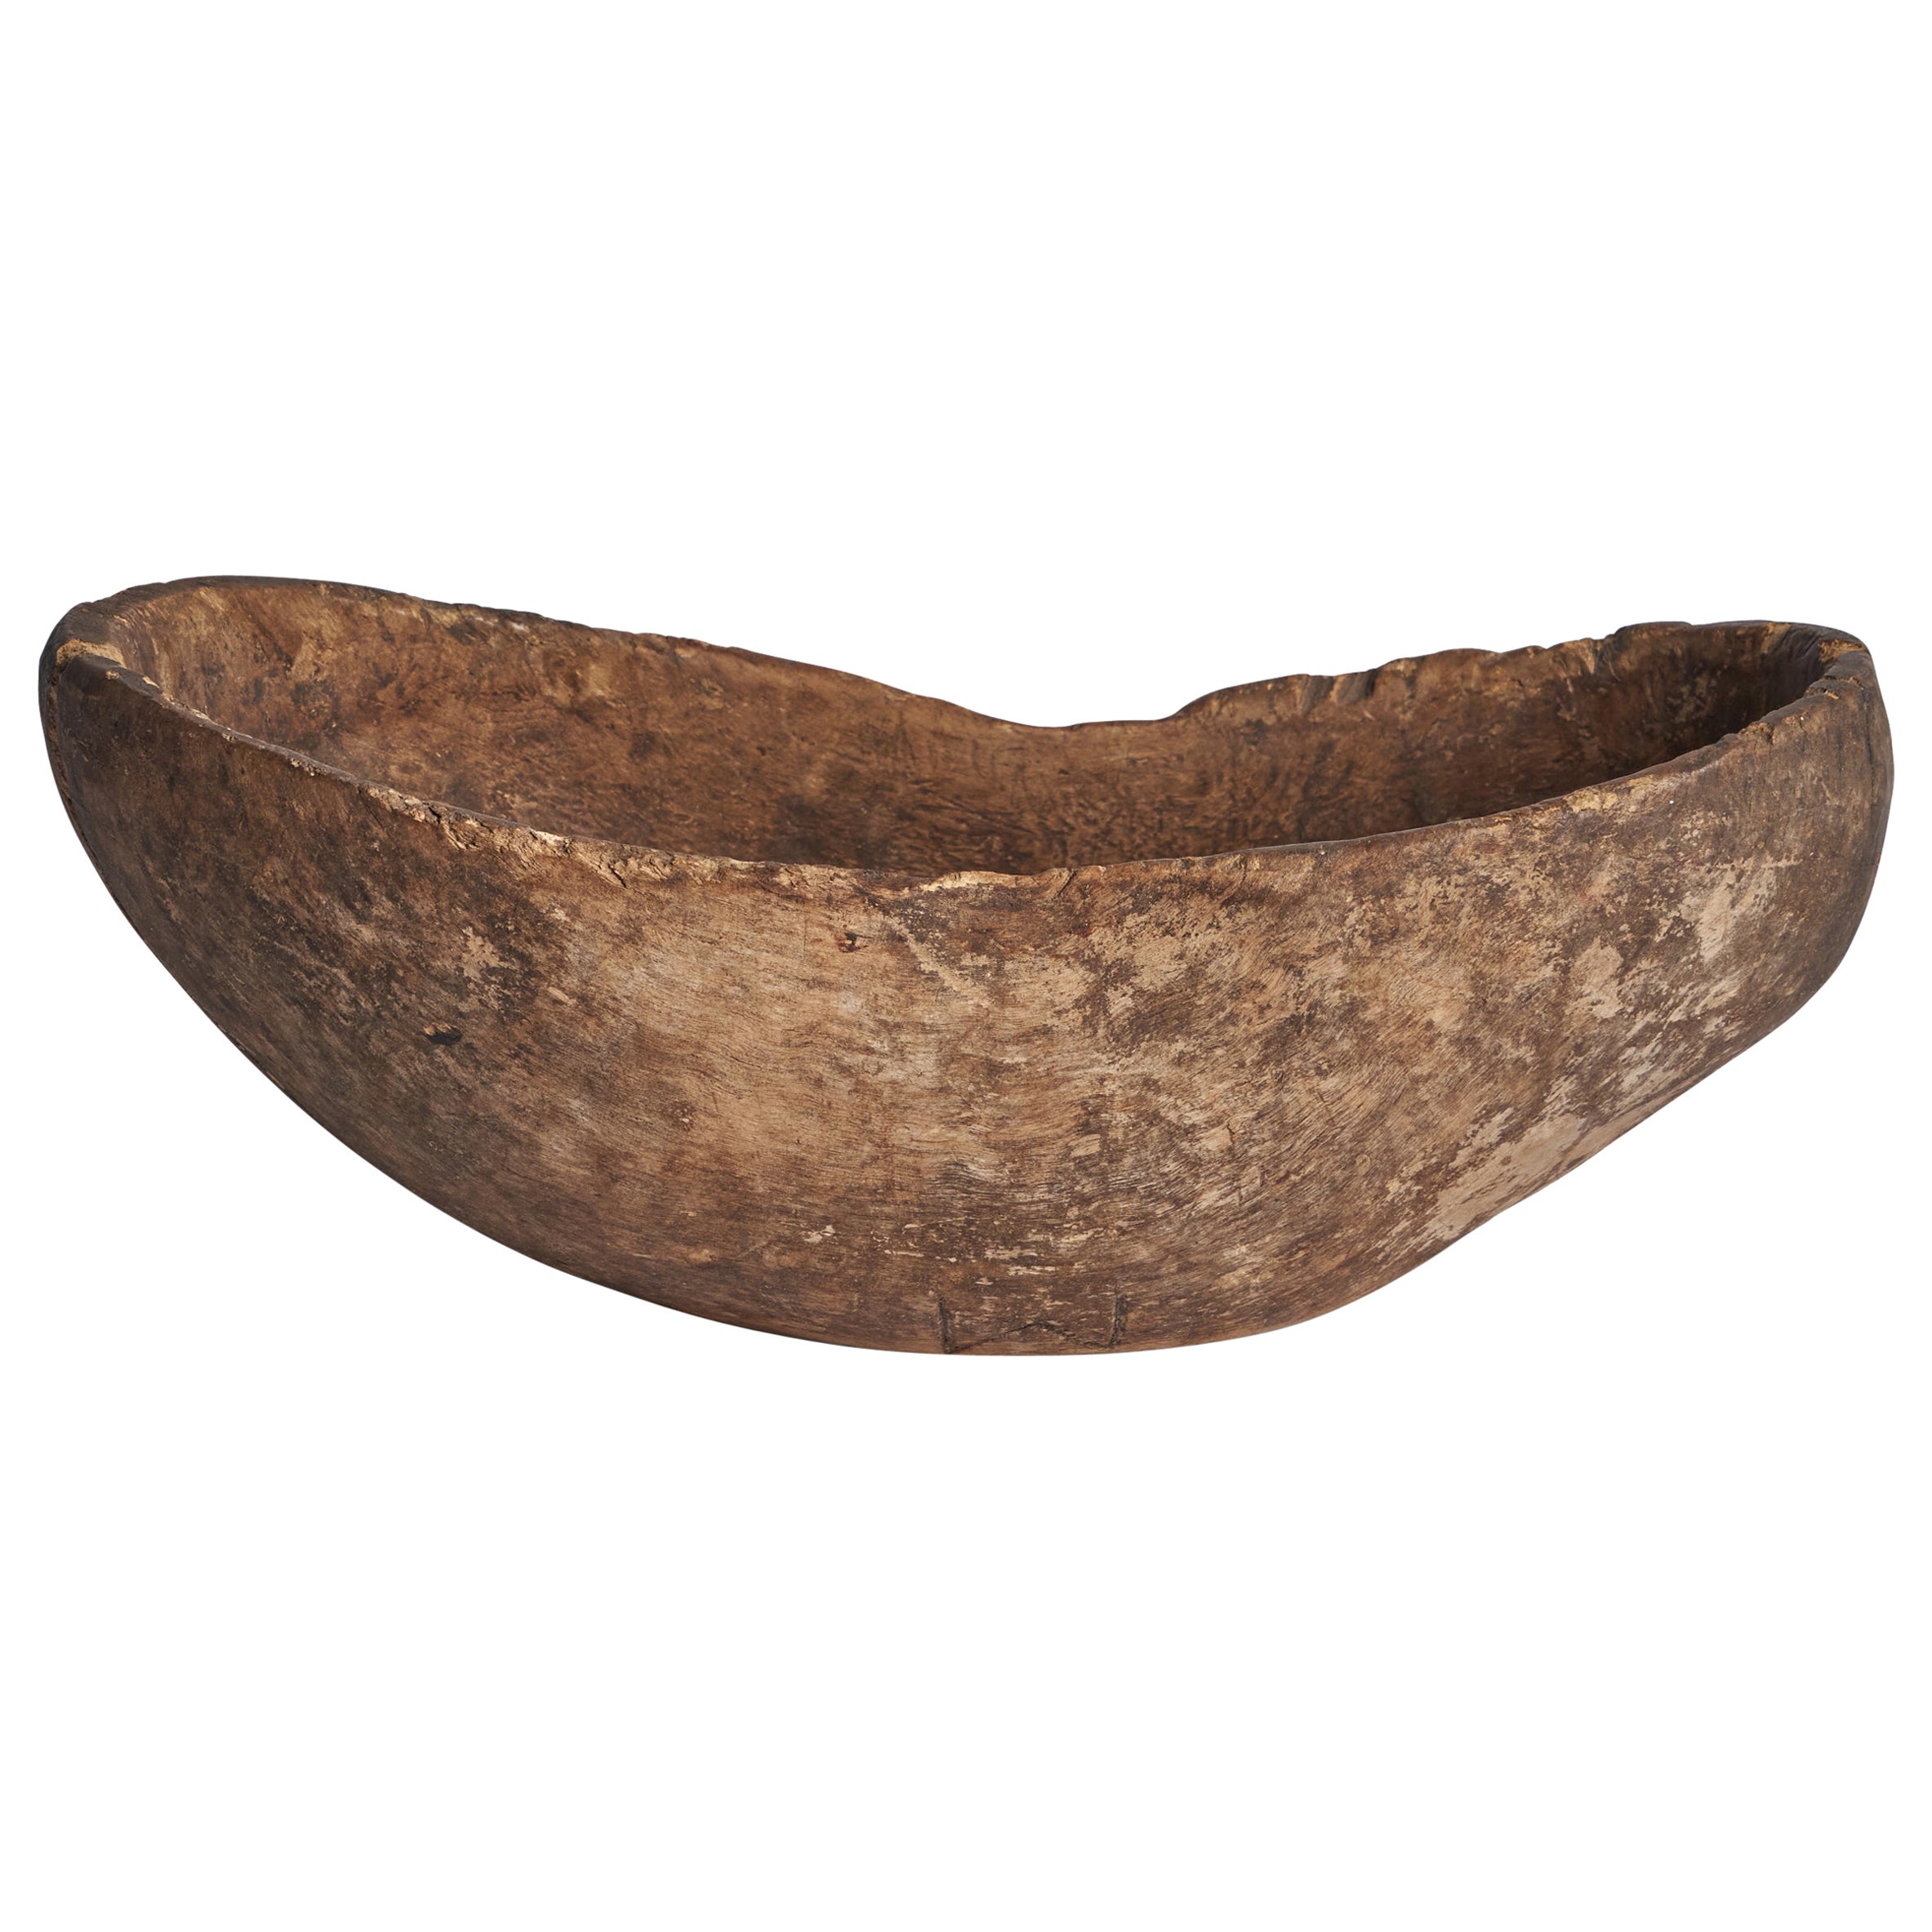 Swedish Craft, Wooden Bowl, Sweden, 17th Century